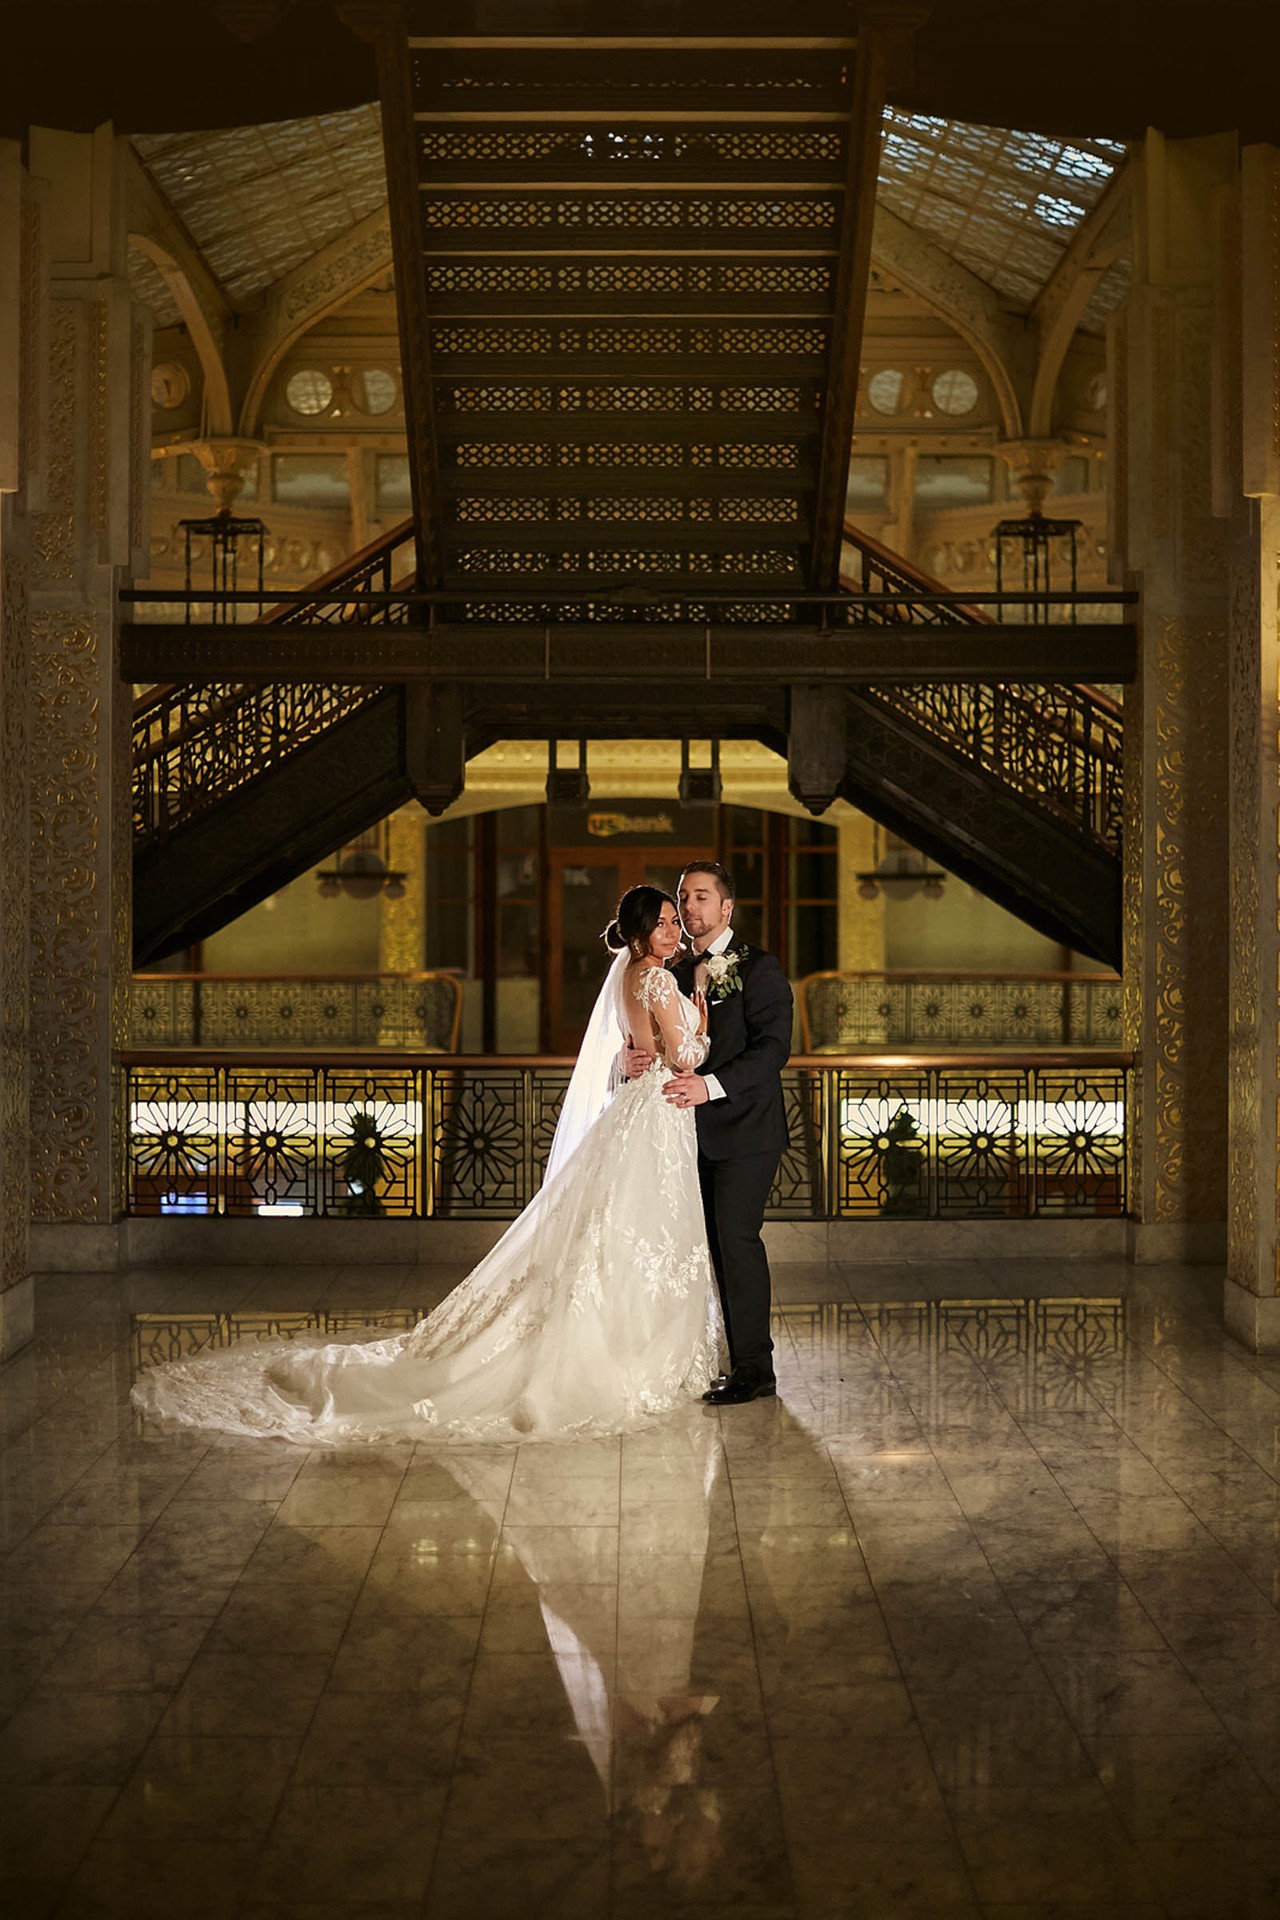 Rookery building wedding photography - CHICAGO WEDDING PHOTOGRAPHER ...